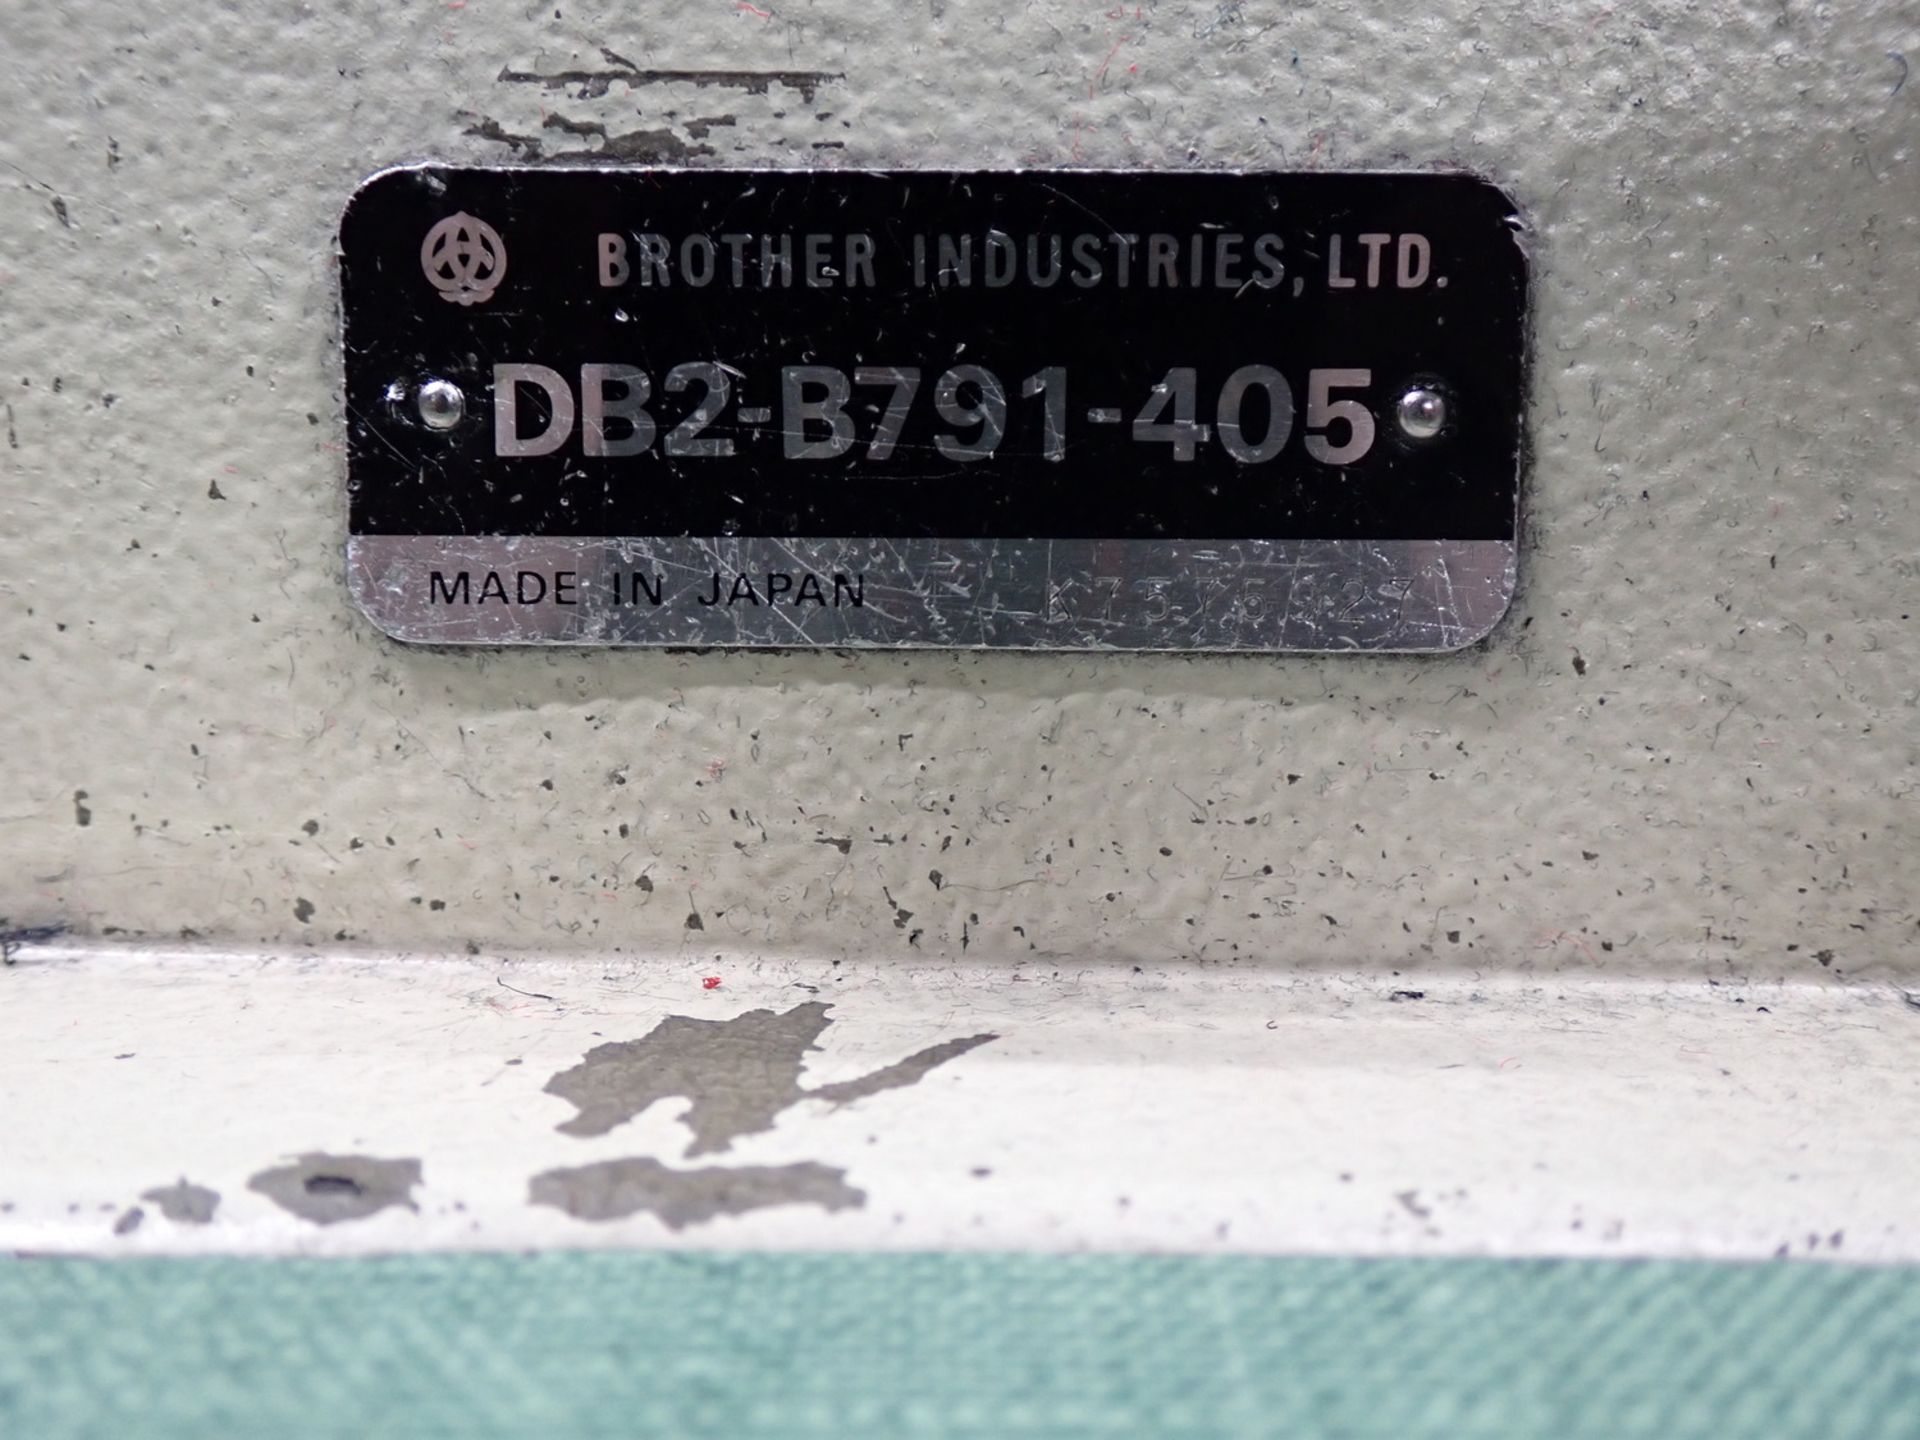 BROTHER DB2-8791-405 SGLE NEEDLE MACHINE W/ E-40 CONTROLLER (110V) - Image 3 of 7